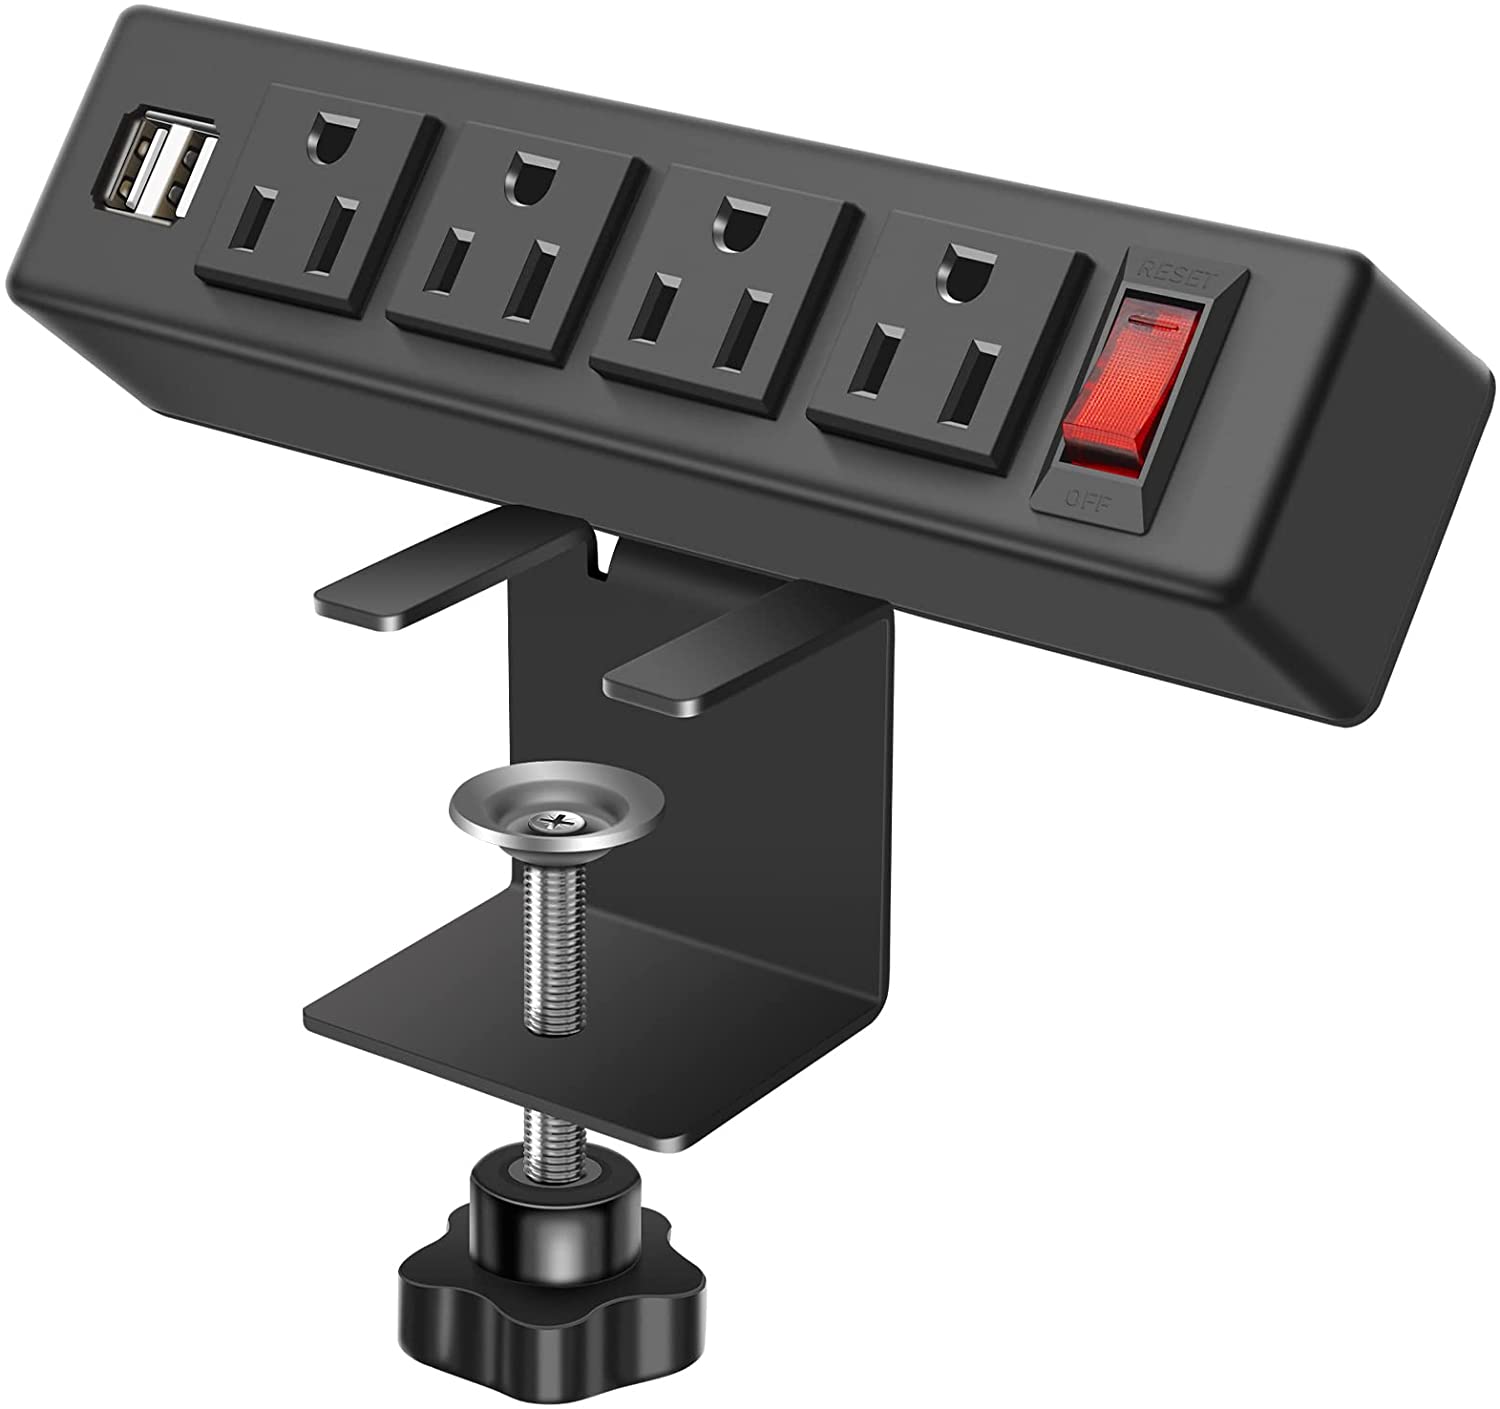 Desk Edge Power Strip with USB Port